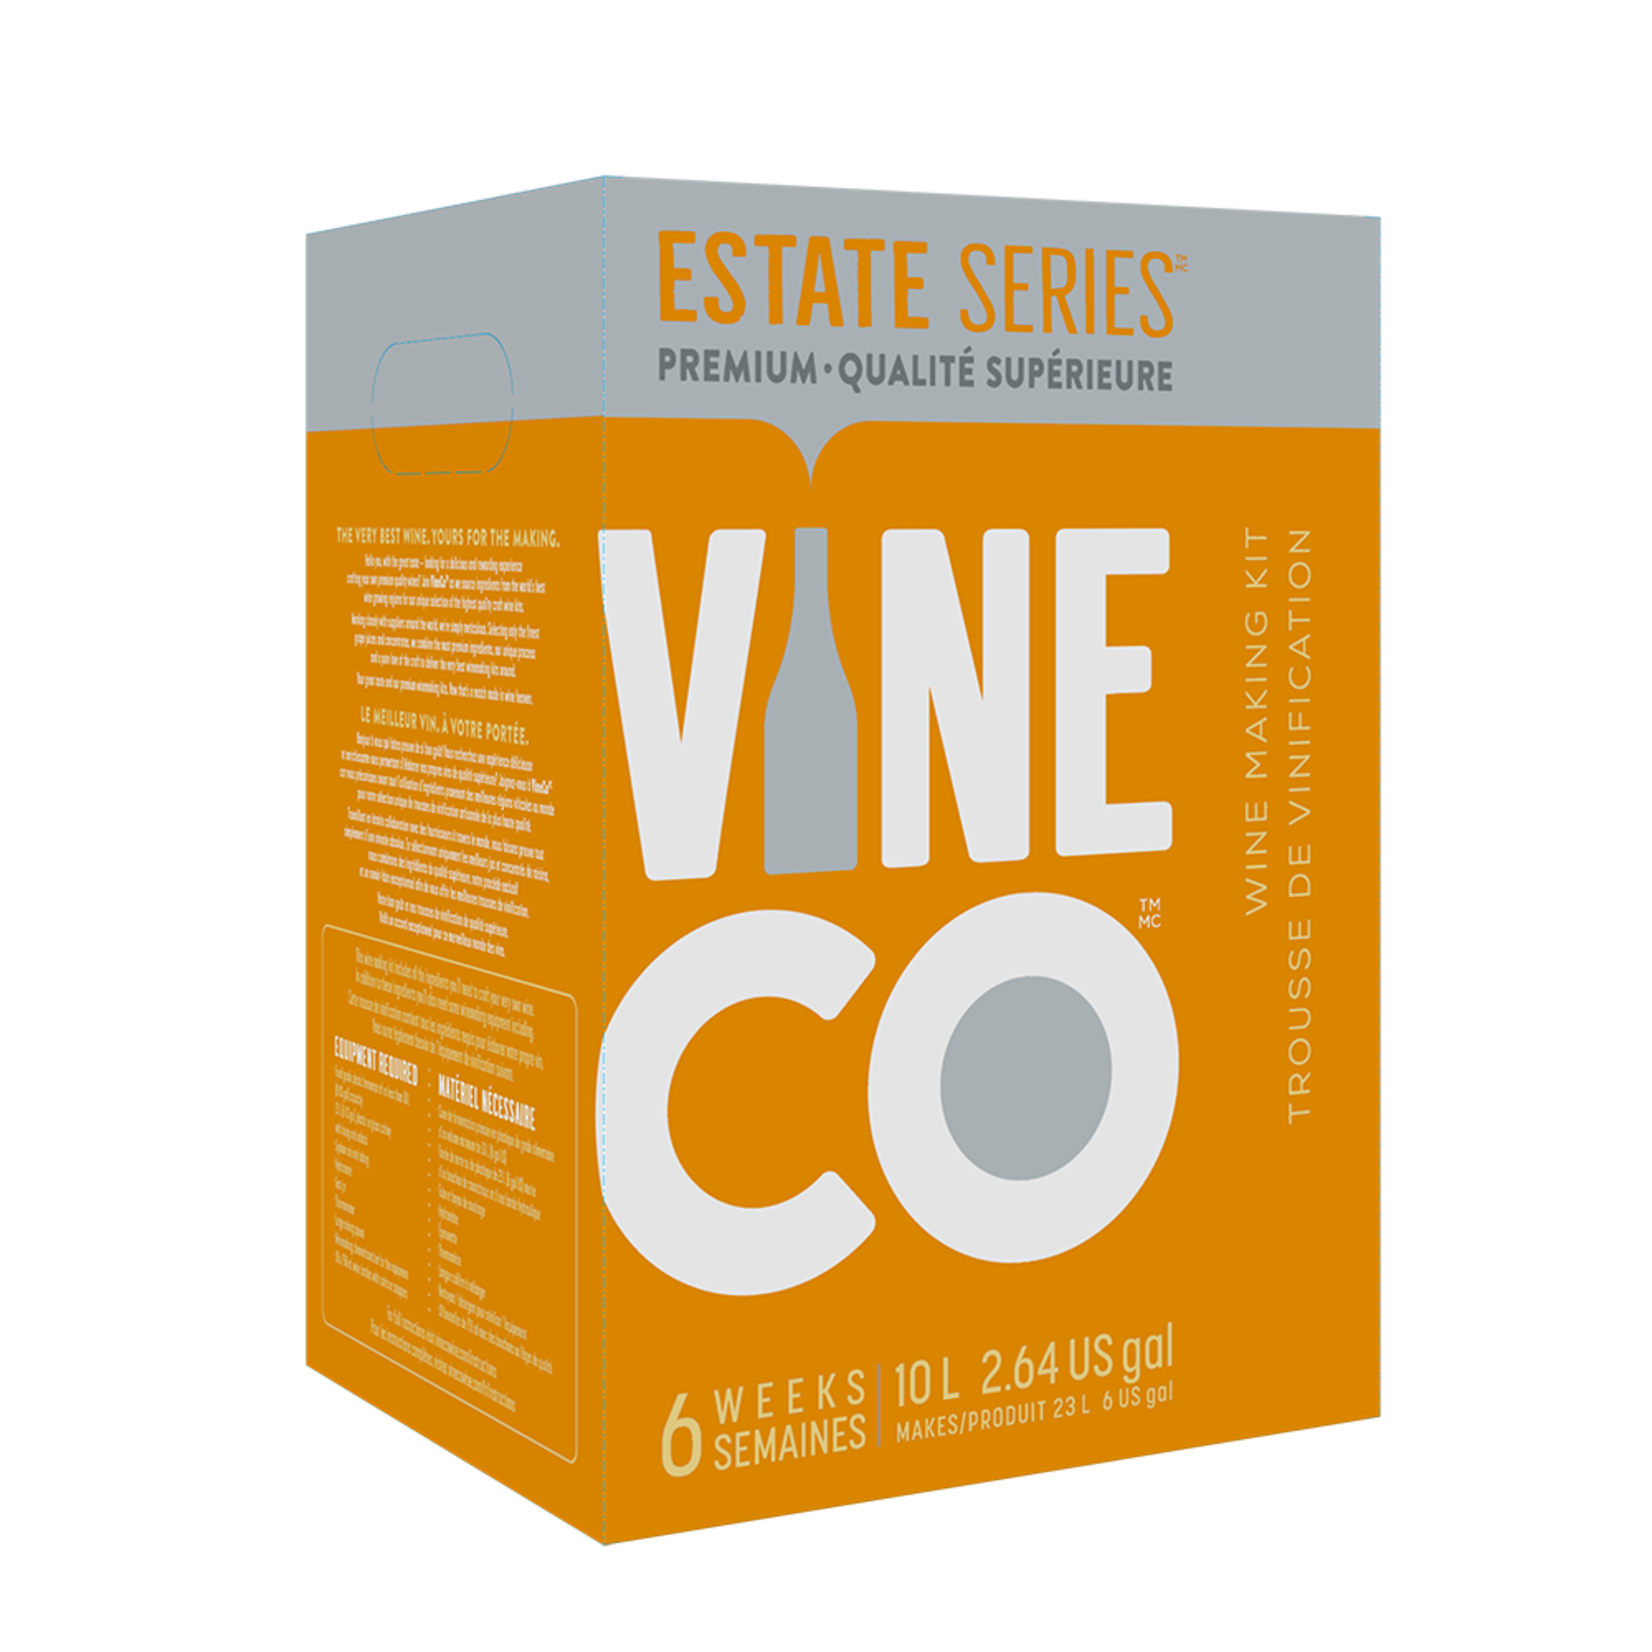 Vine Co. Estate Series Cab Merlot (Wine Kit), CAL 14 L